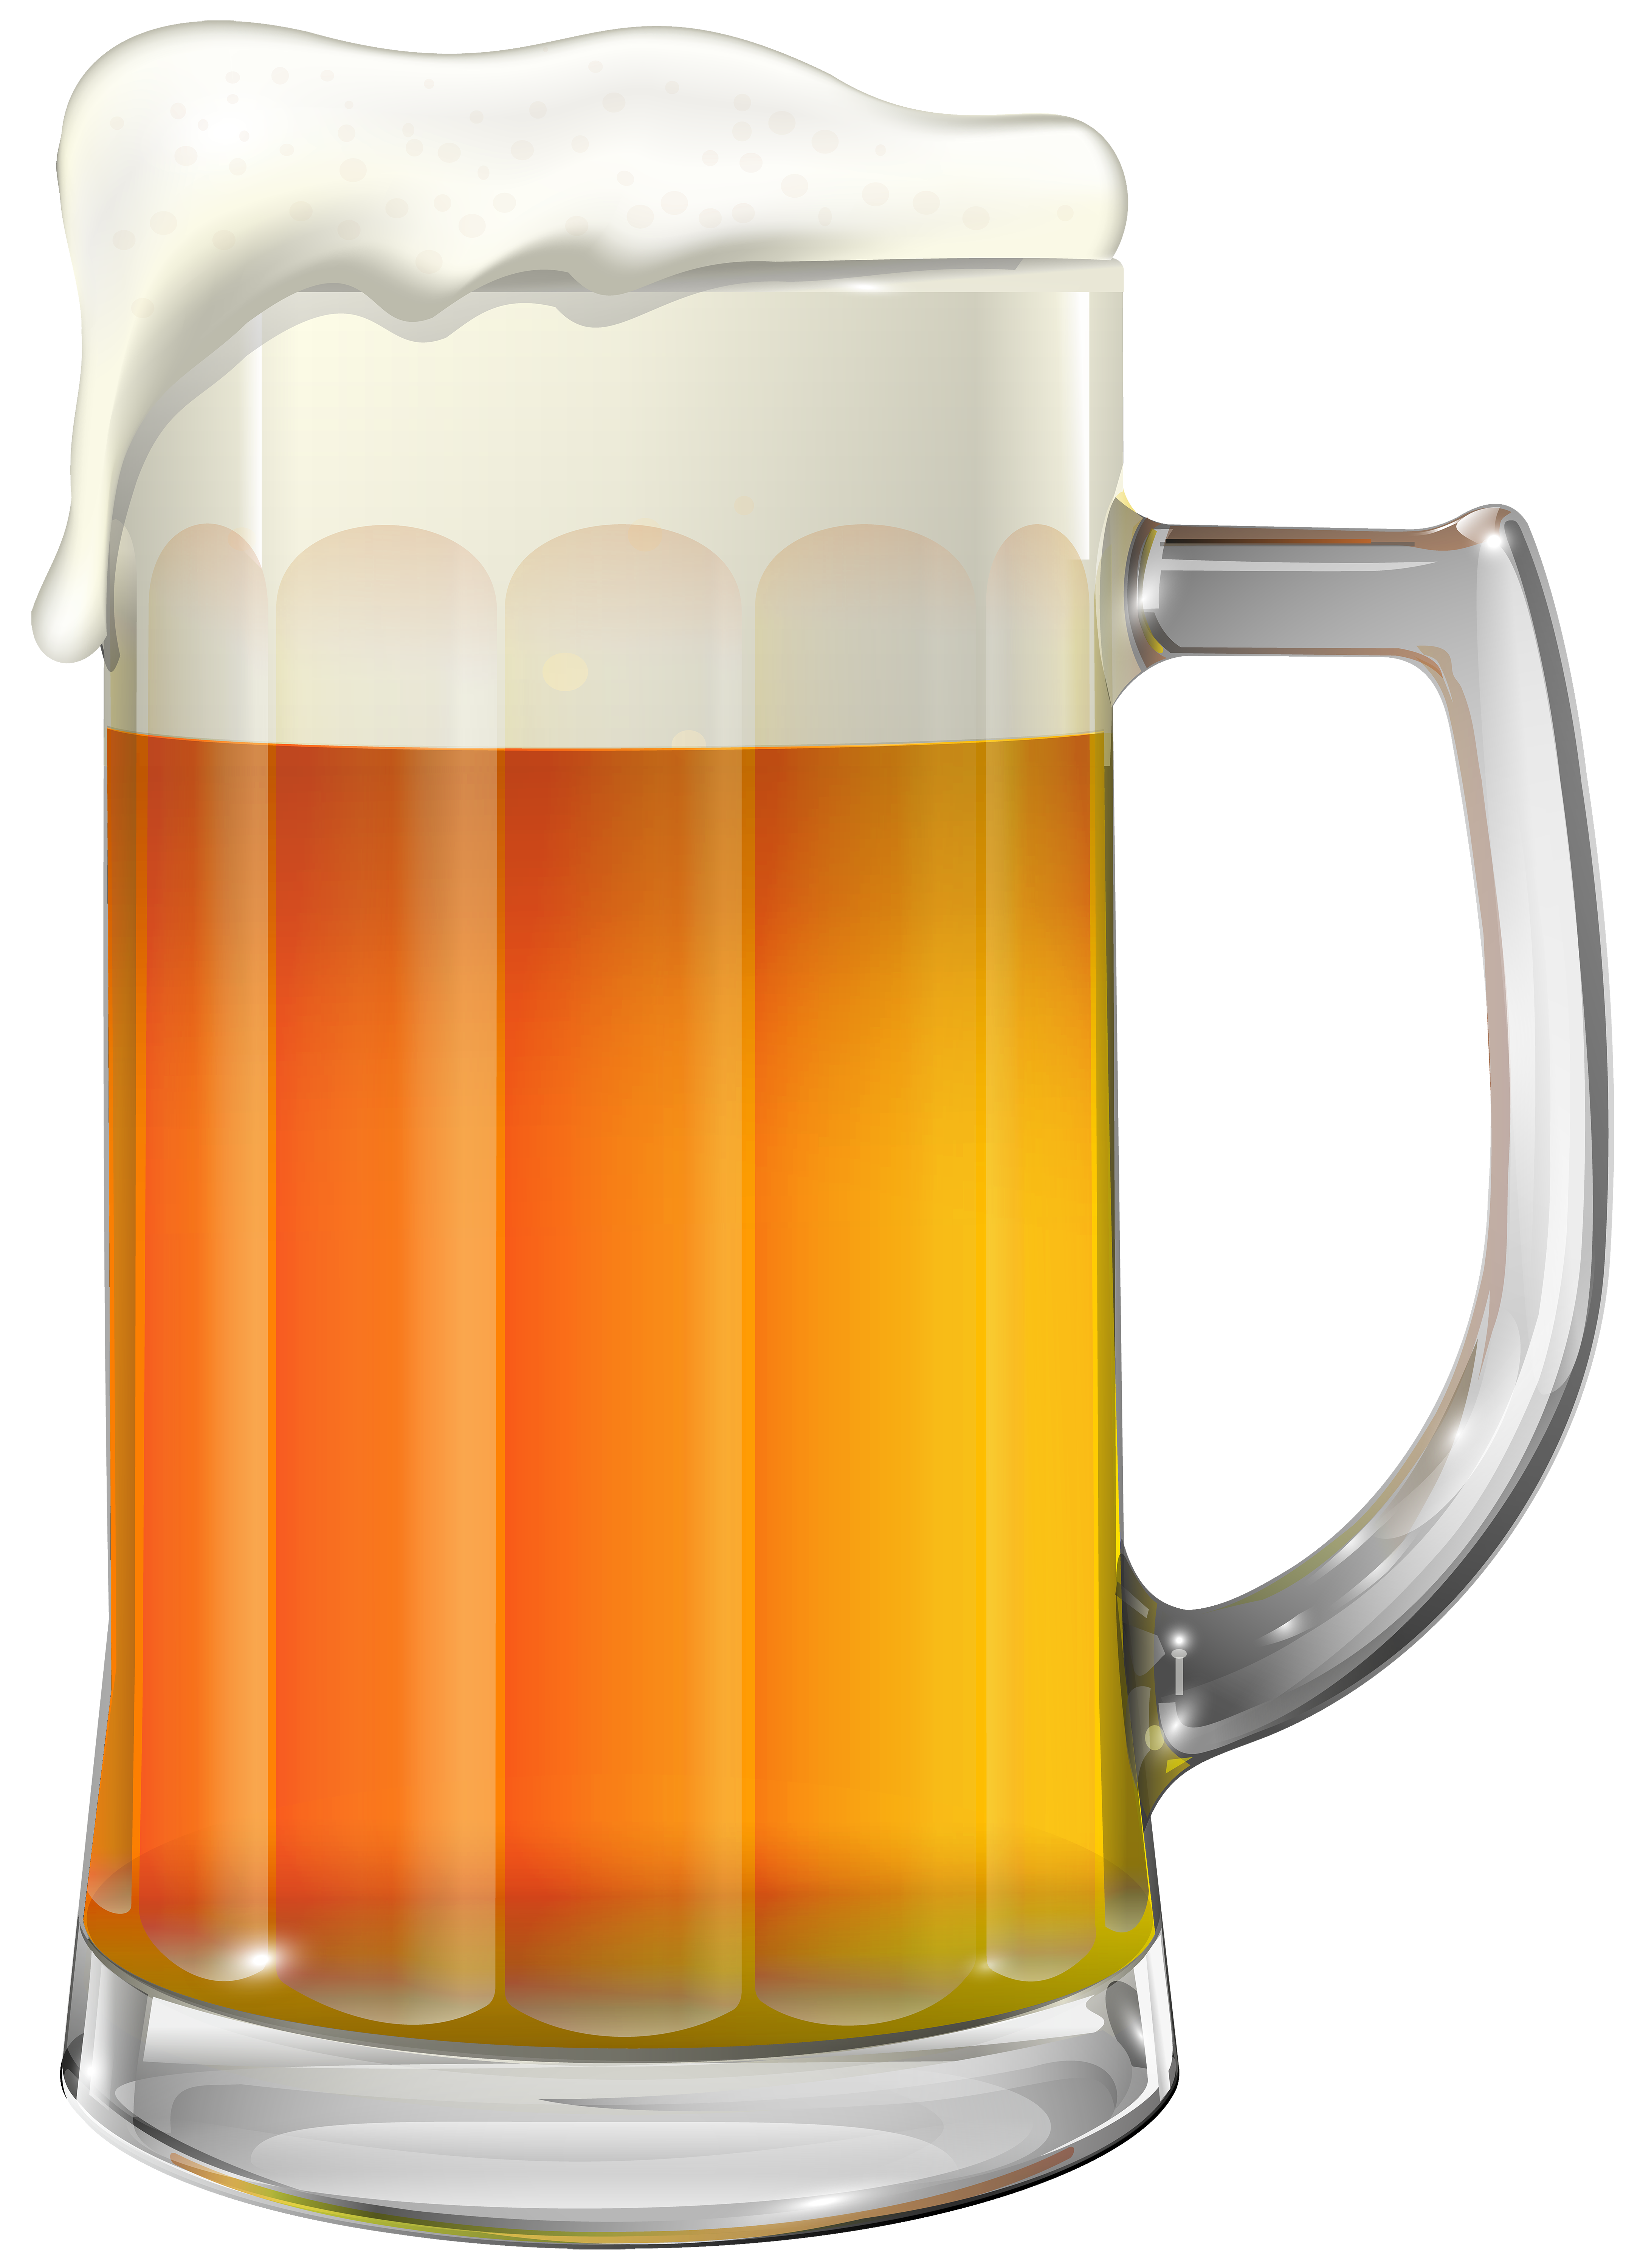 Beer Glassware Transparent Mug PNG Image High Quality Clipart